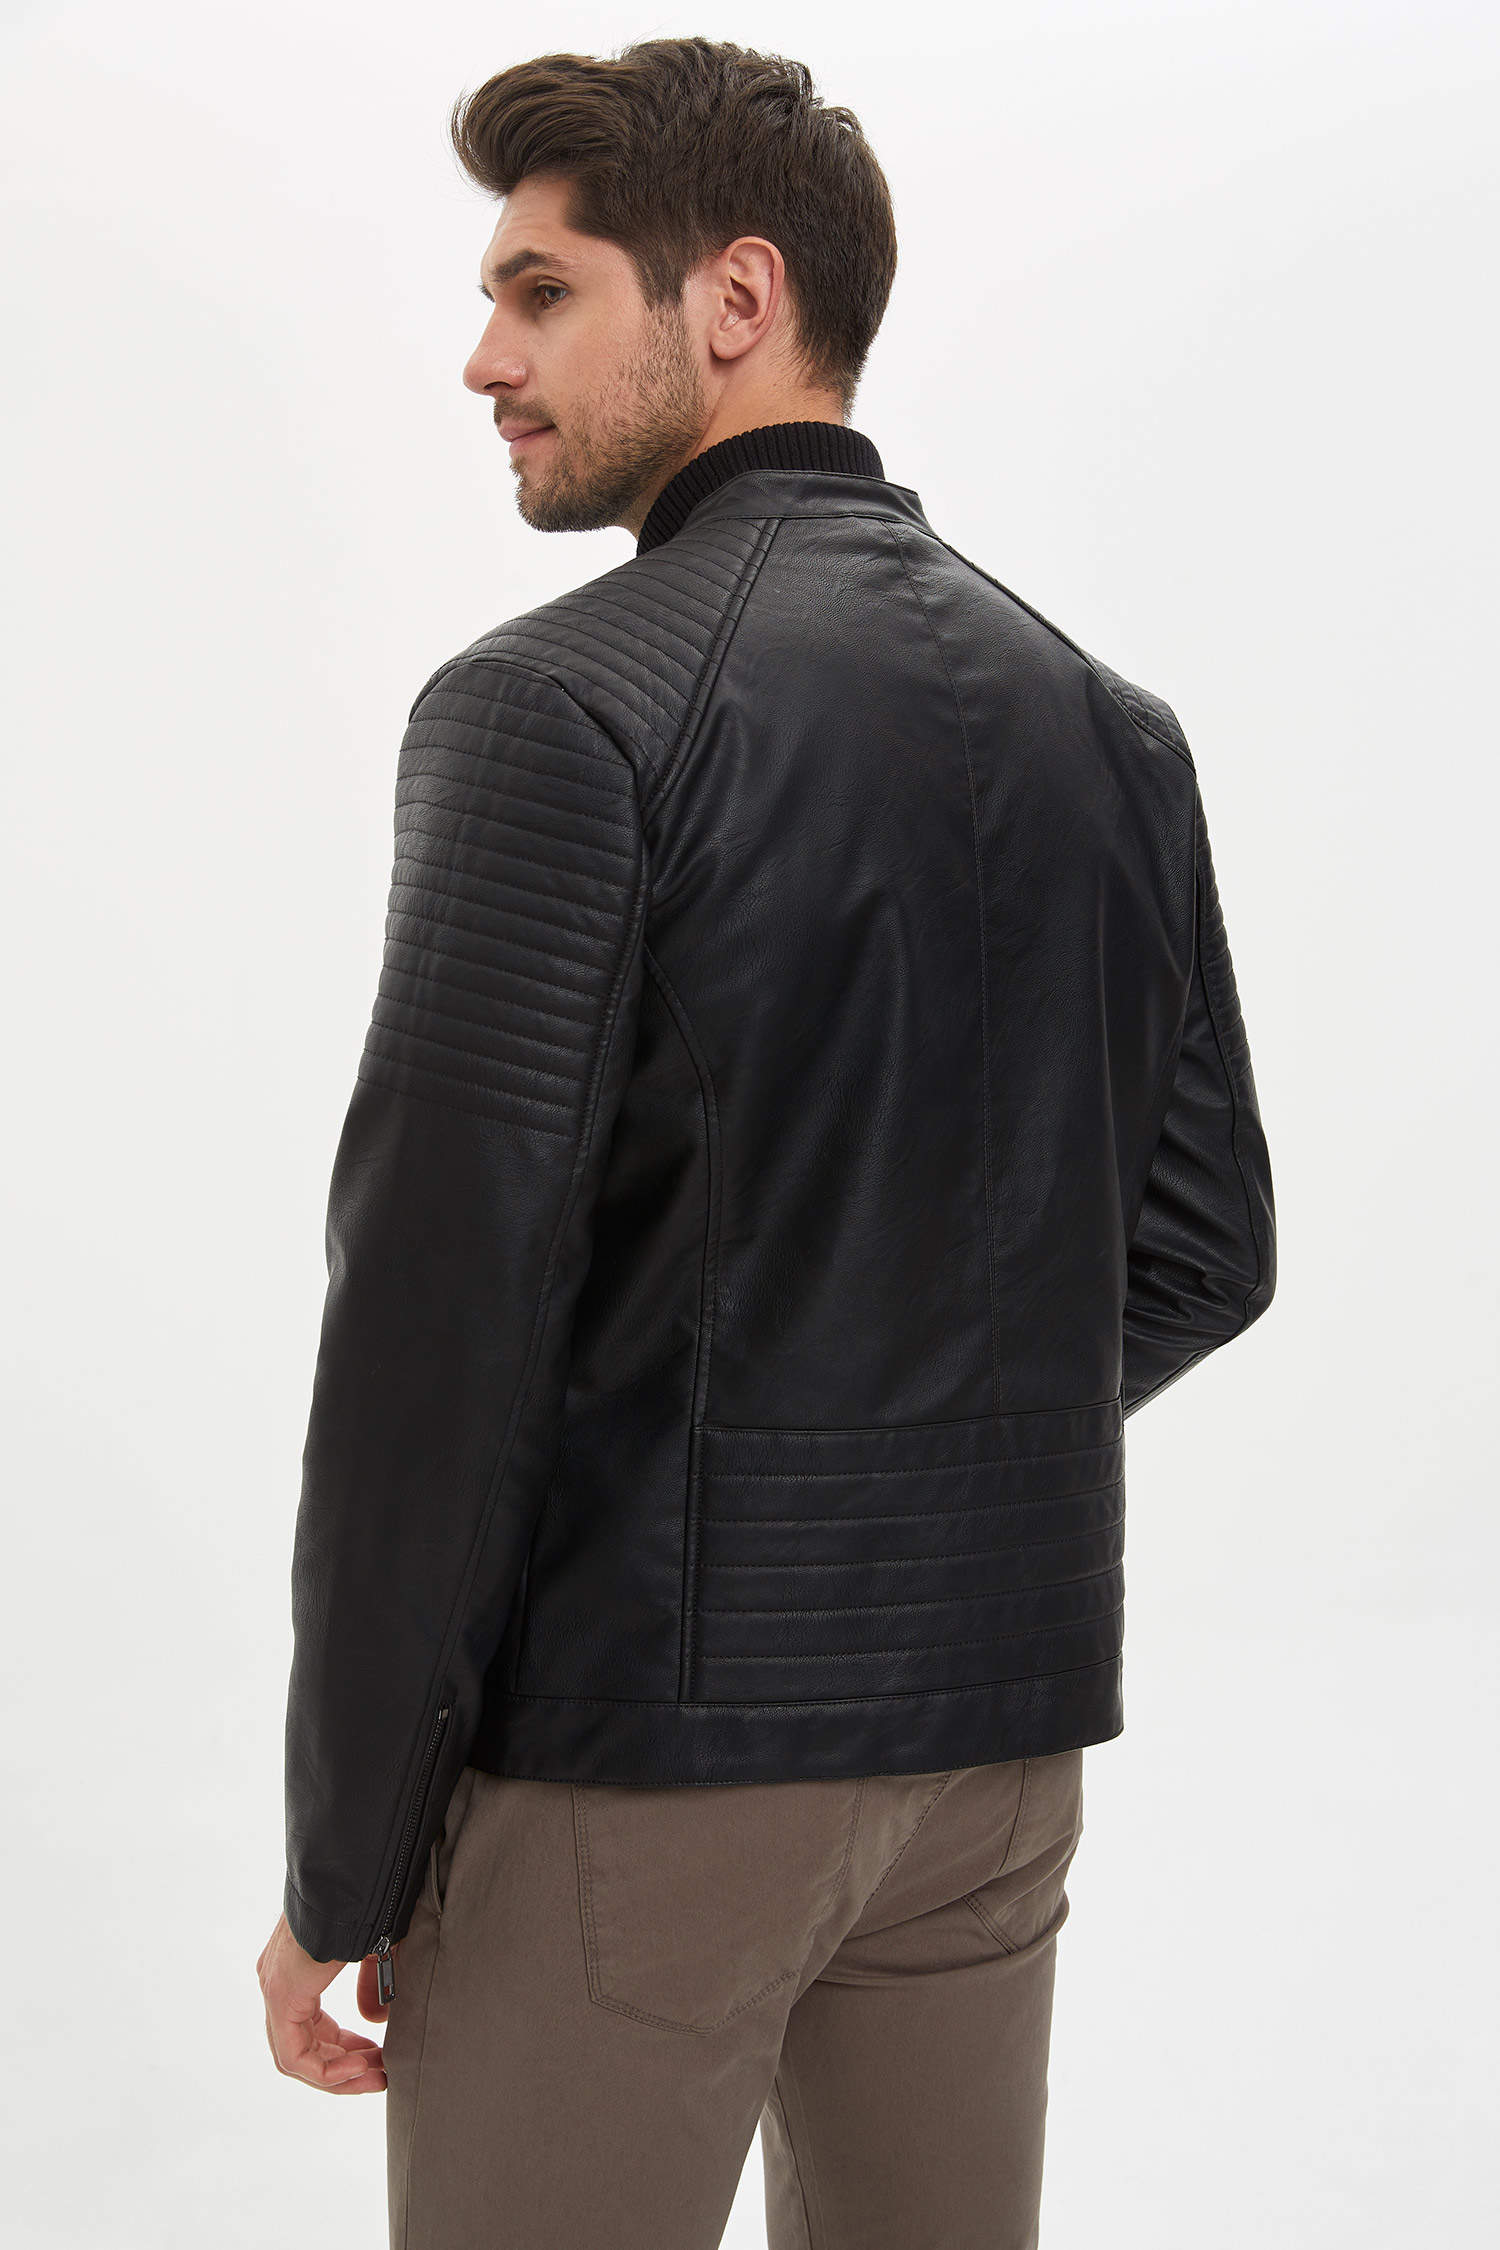 parti örnek karbeyaz  Black MAN Faux Leather Jacket 1165197 | DeFacto